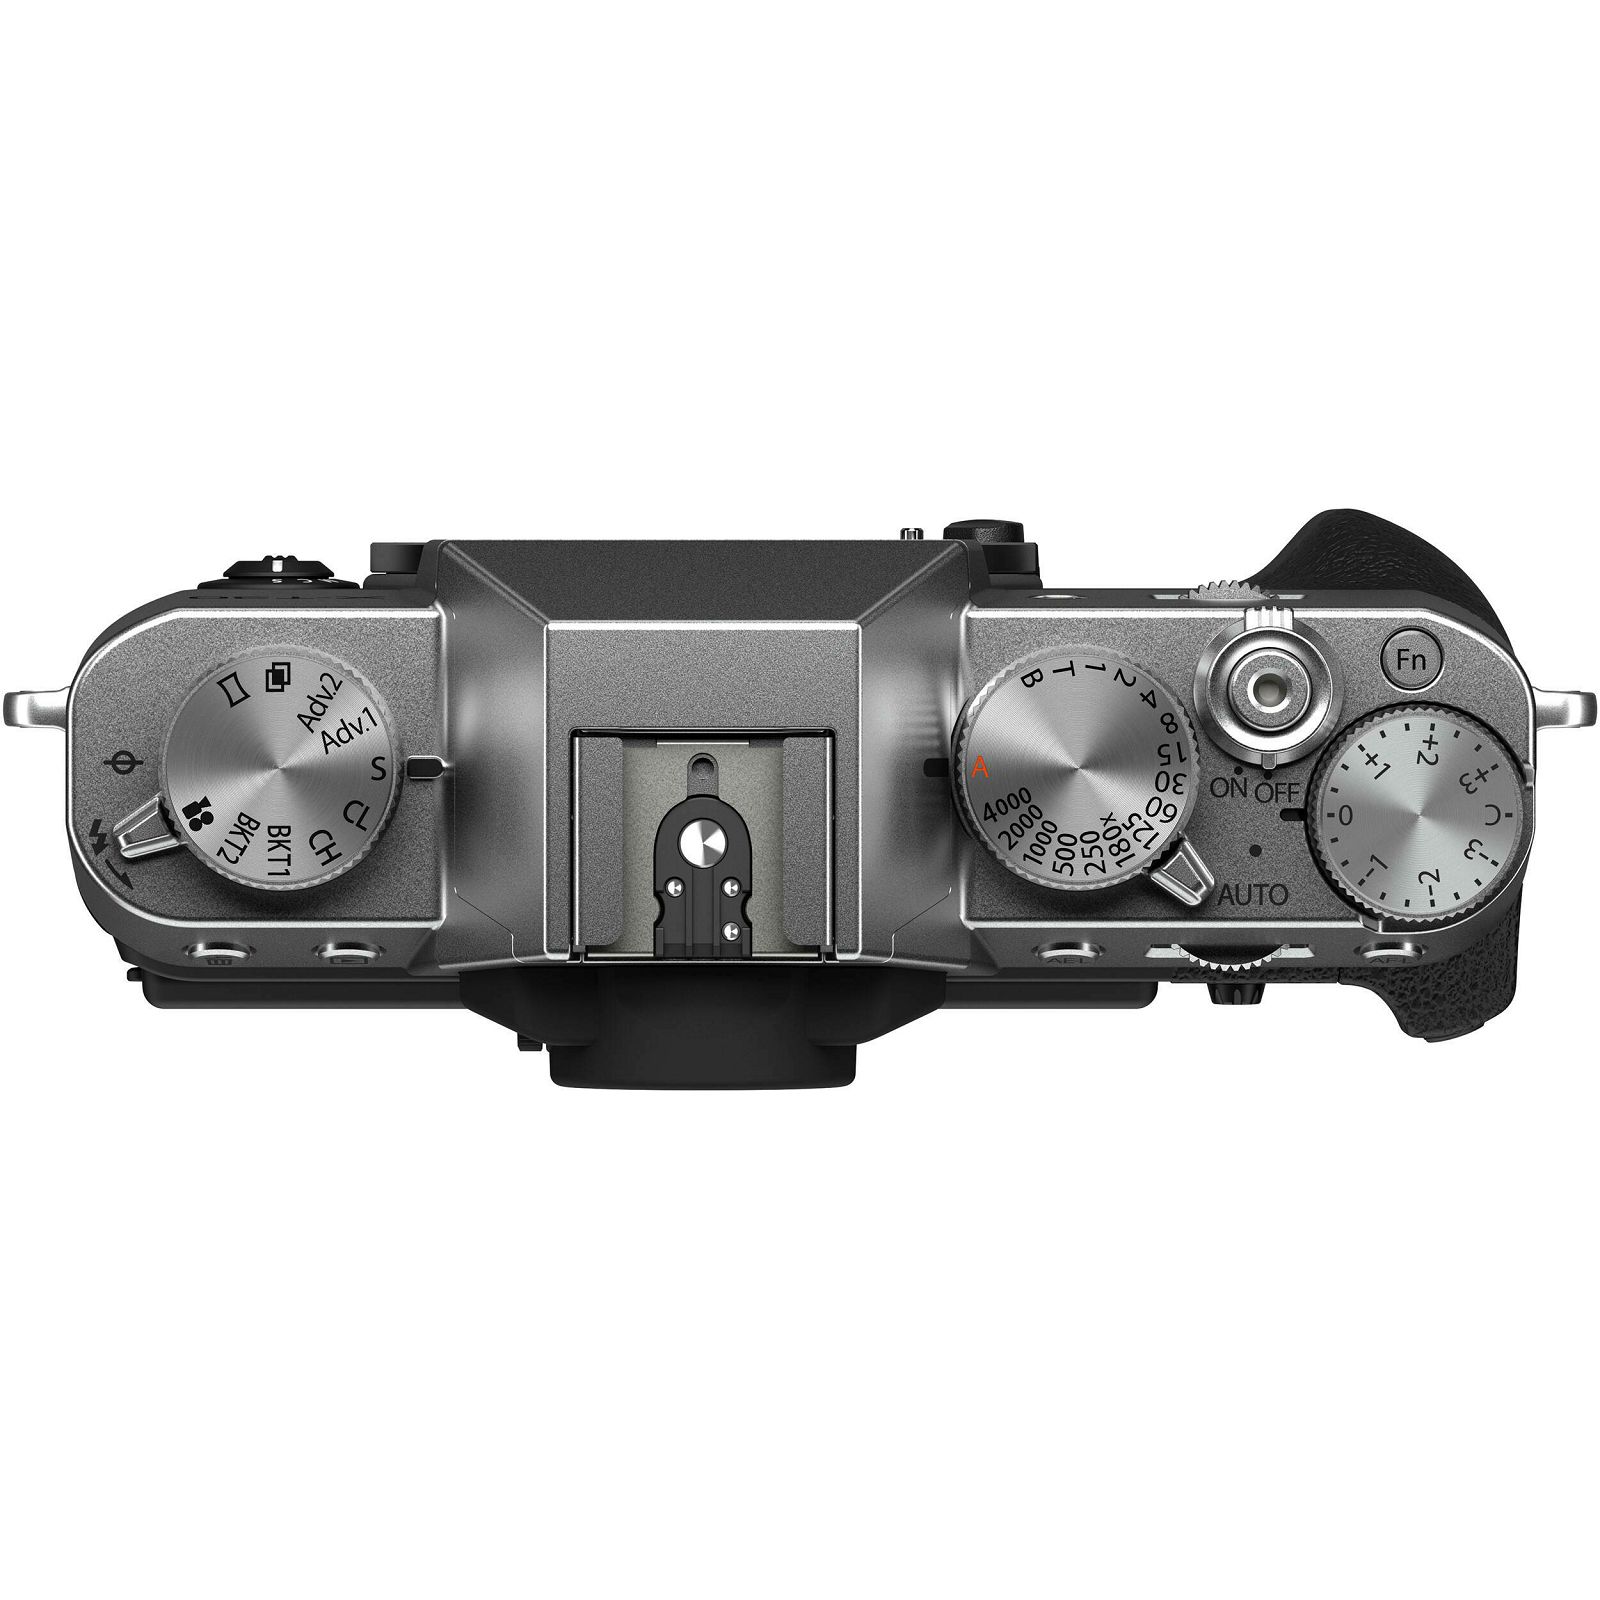 Fujifilm X-T30 II Body Silver srebreni Digitalni fotoaparat Mirrorless camera Fuji Finepix (16759641)